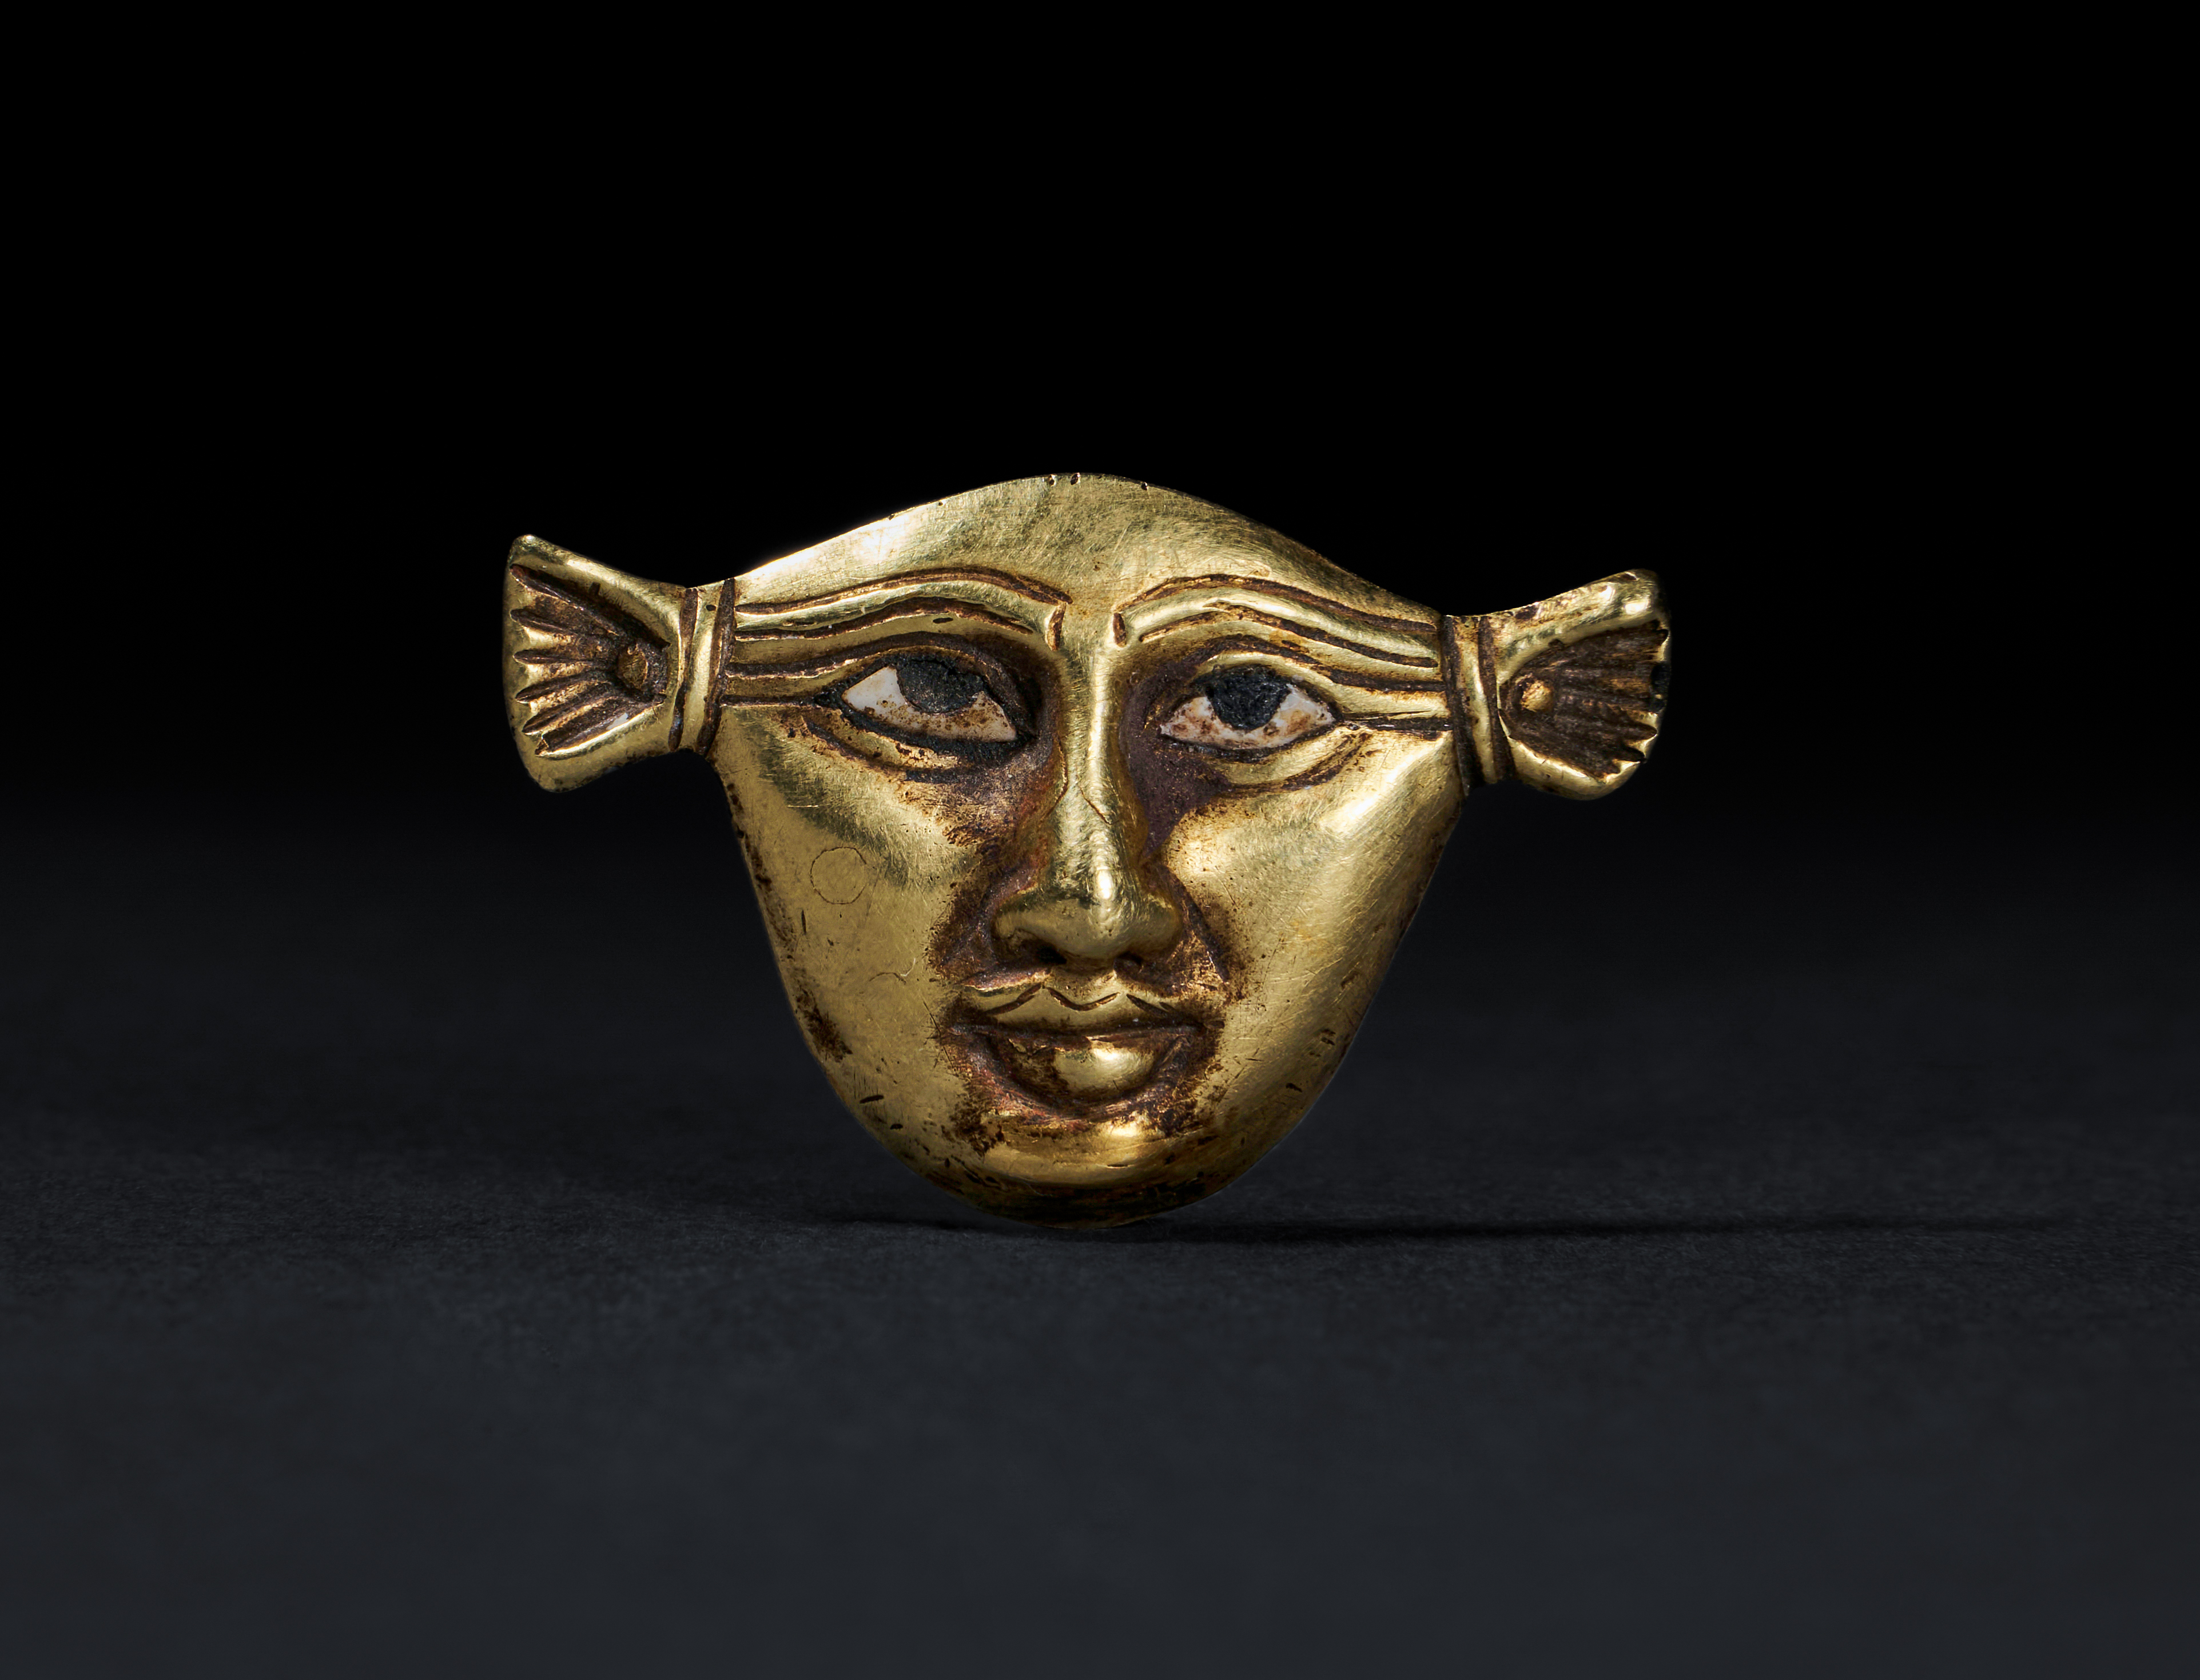 AN EGYPTIAN GOLD FACE INLAY, NEW KINGDOM, AMARNA PERIOD, DYNASTY XVIII, CIRCA 1353-1336 B.C.